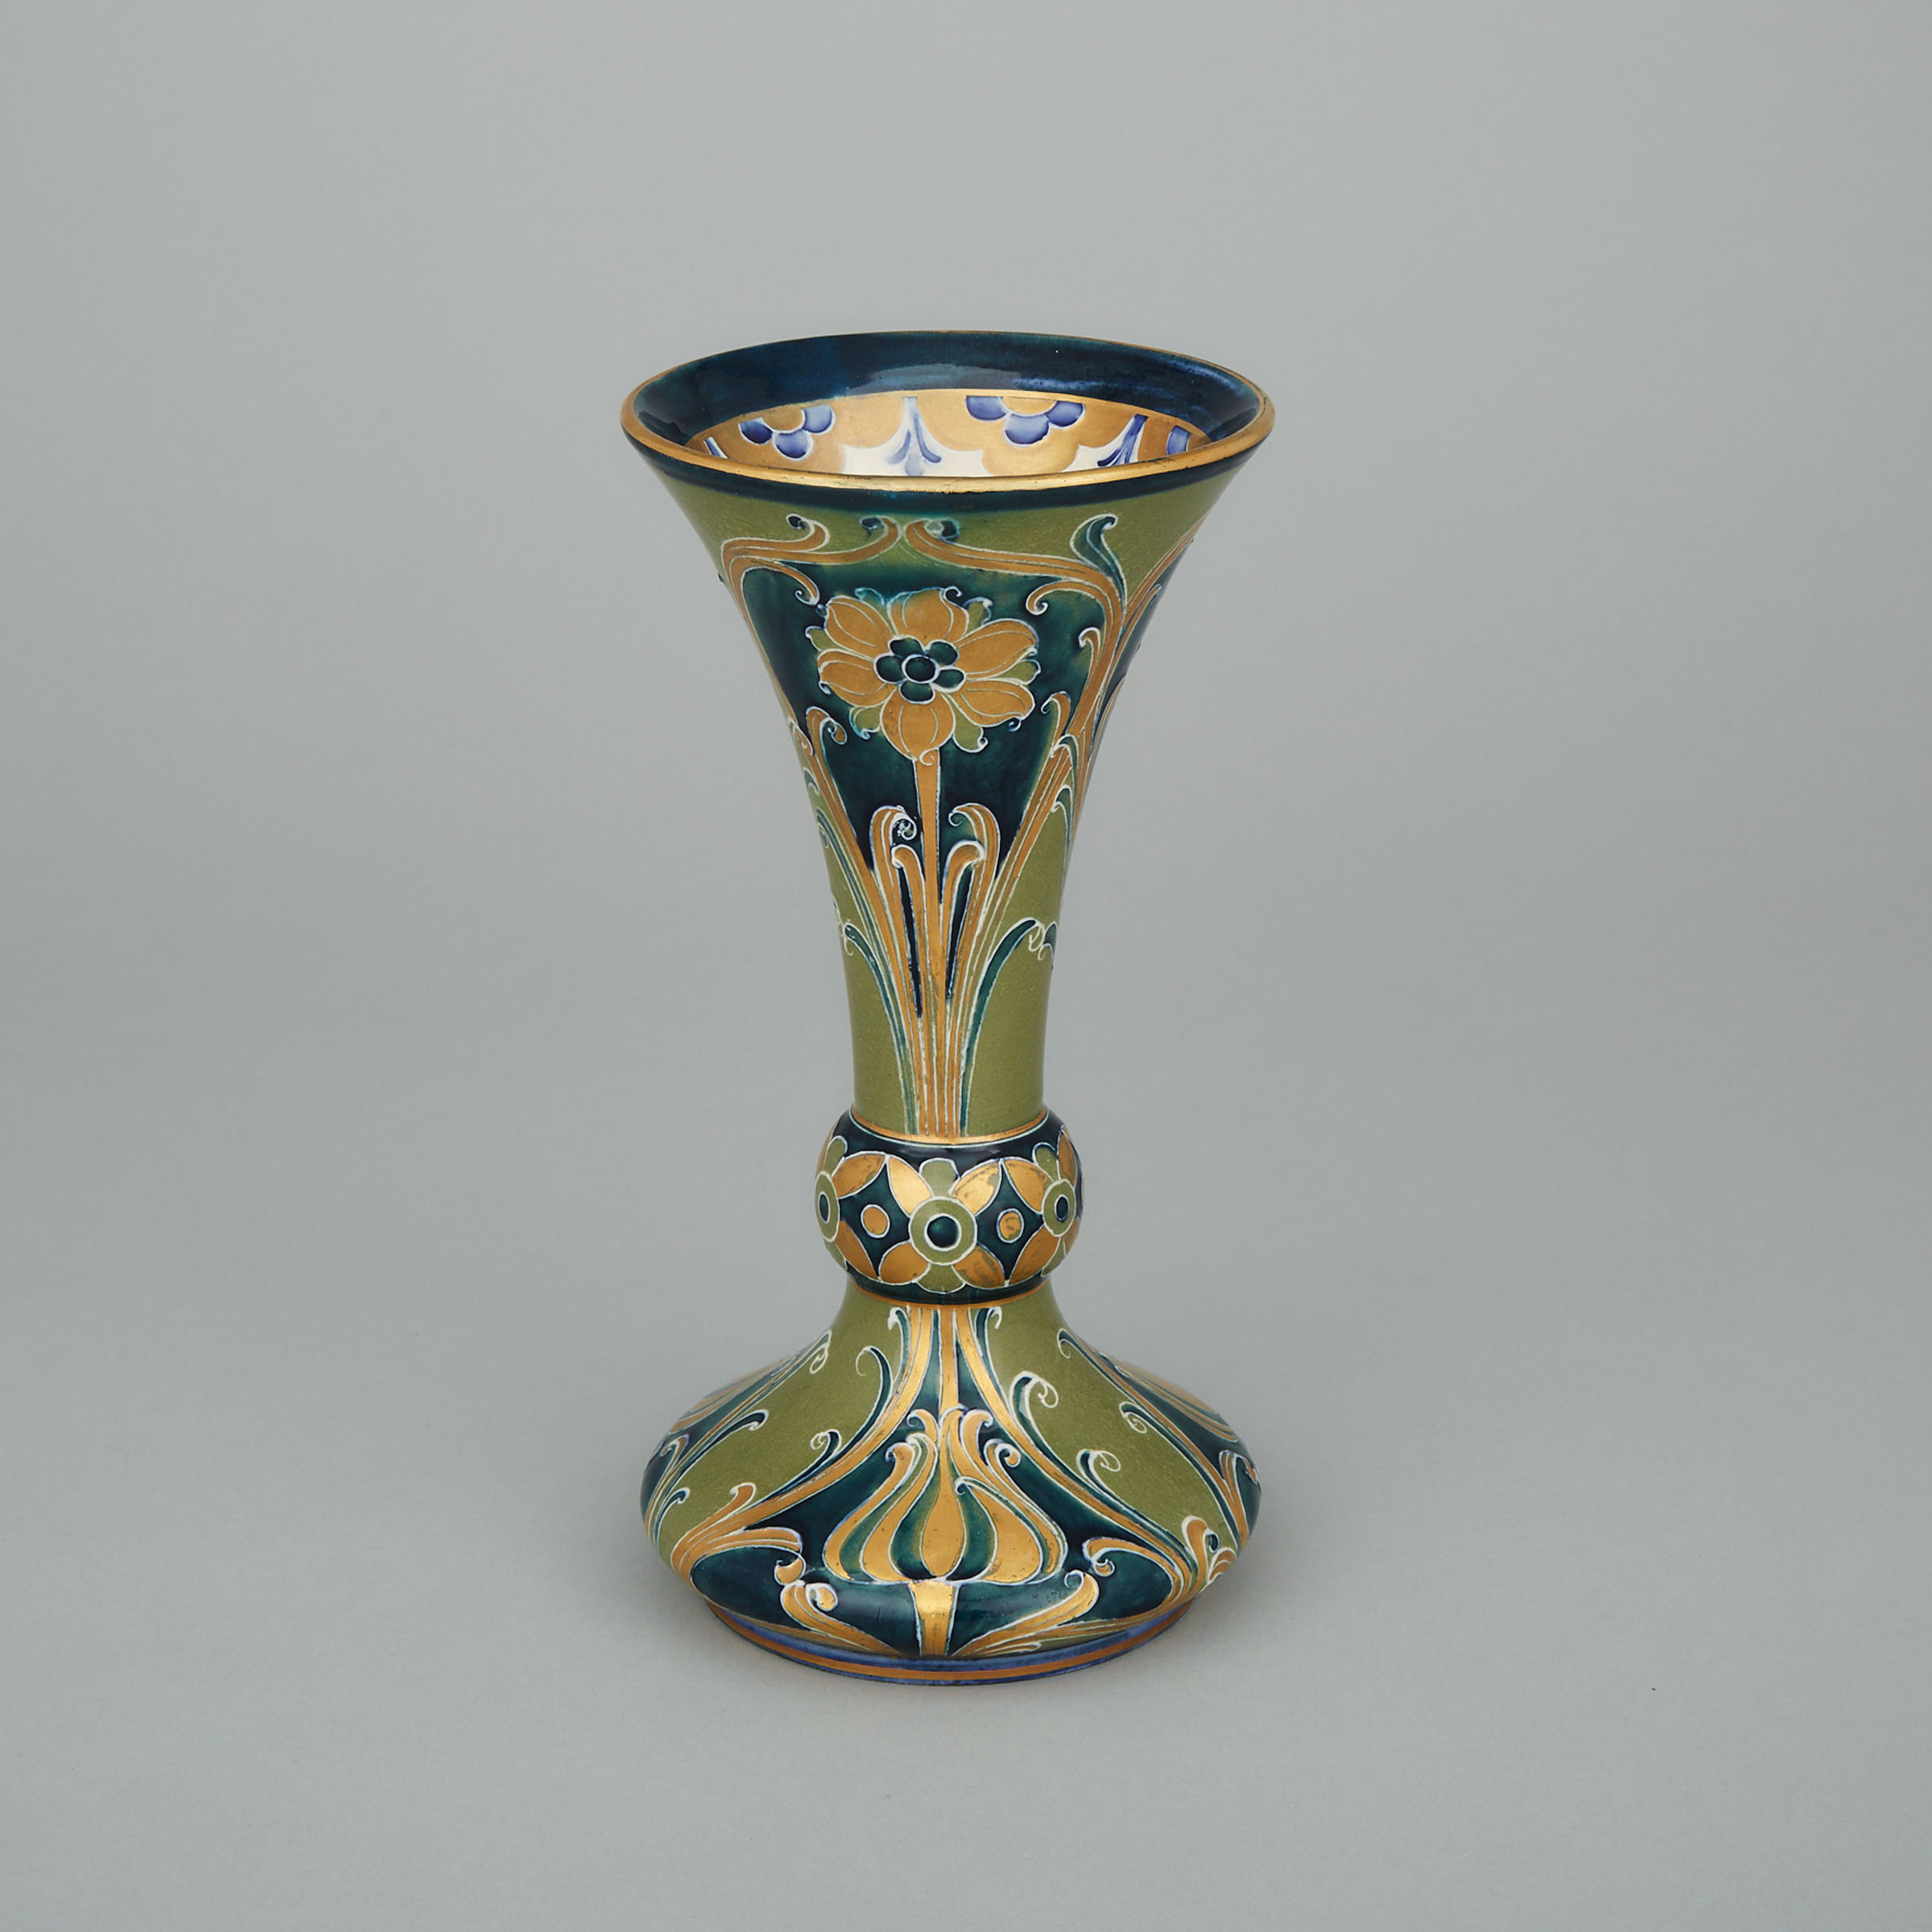 Macintyre Moorcroft Green and Gold Florian Trumpet Vase, c.1903